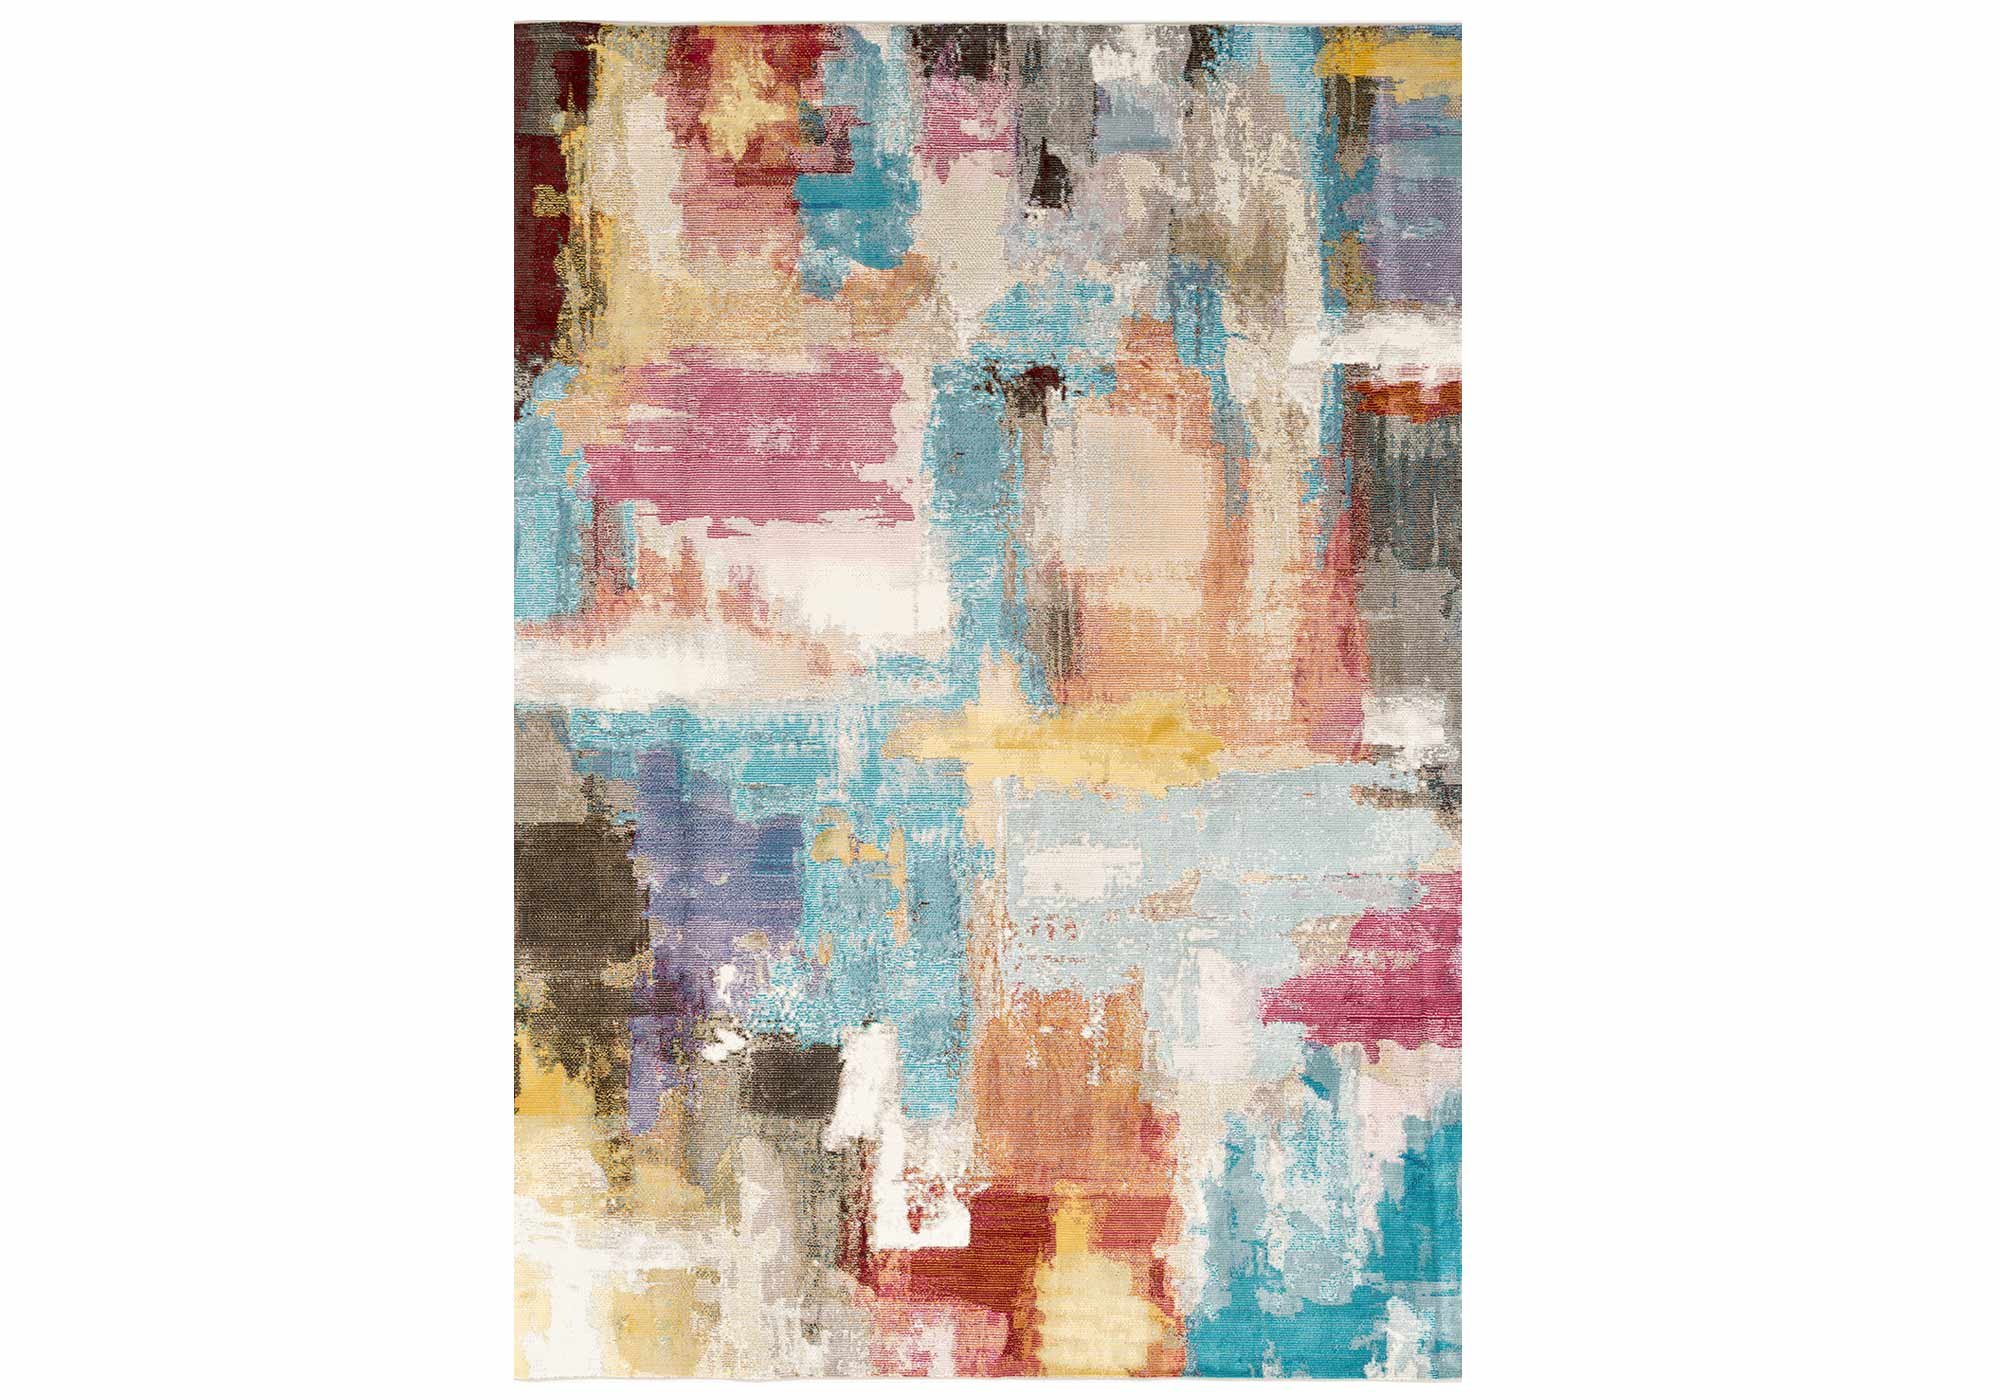 Festival Teppich 80 x 150 cm - mehrfarbig - 6 mm Höhe - Picasso 598